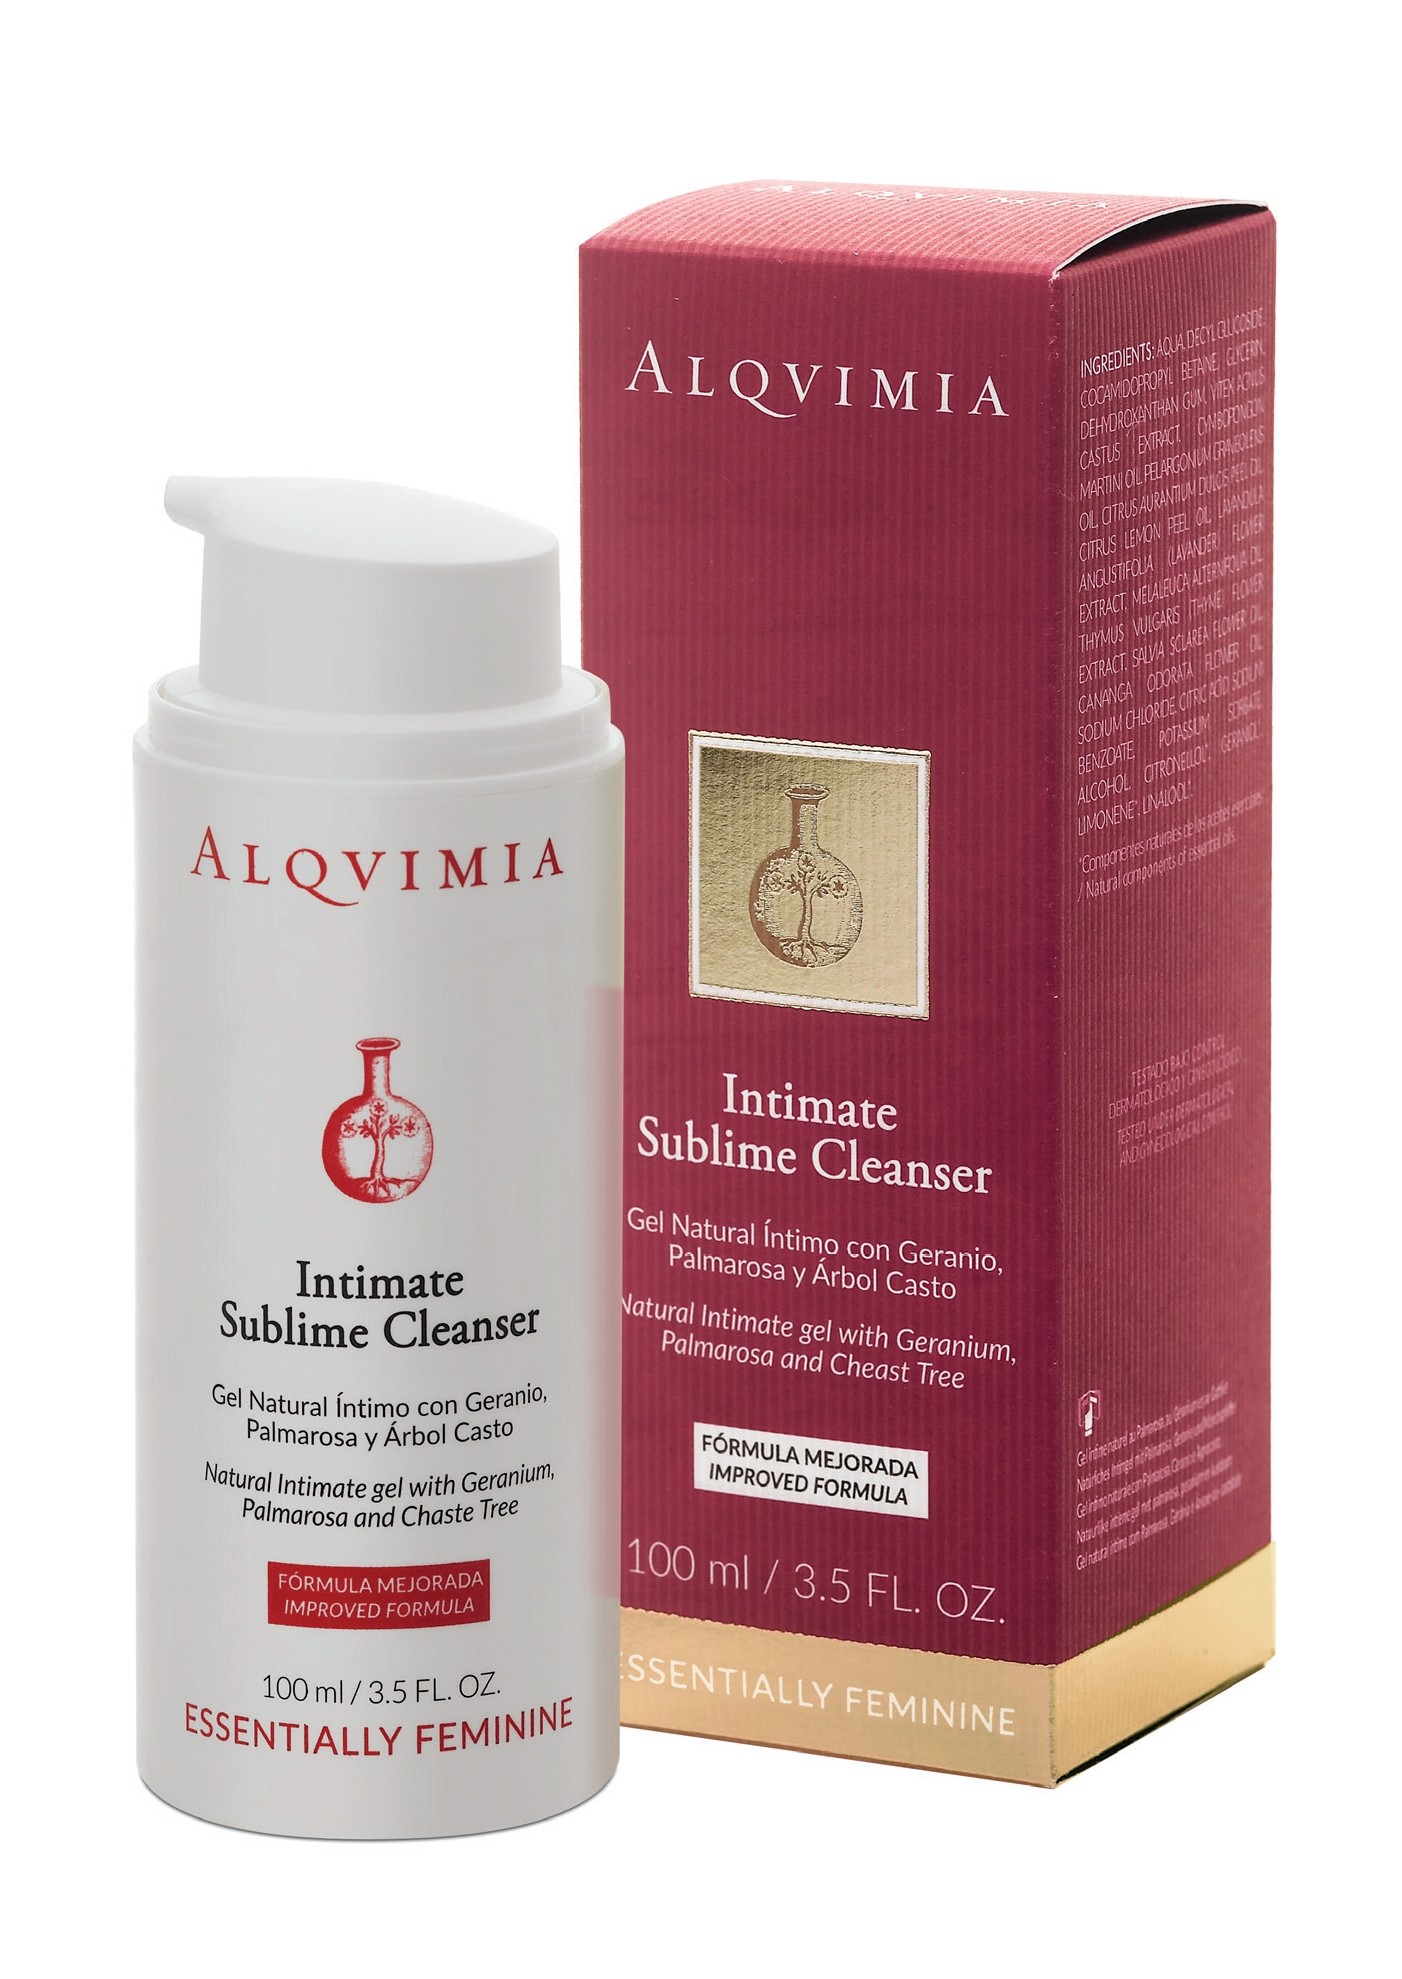 Alqvimia Intimate Sublime Cleanser 100ml (Improved Formula)